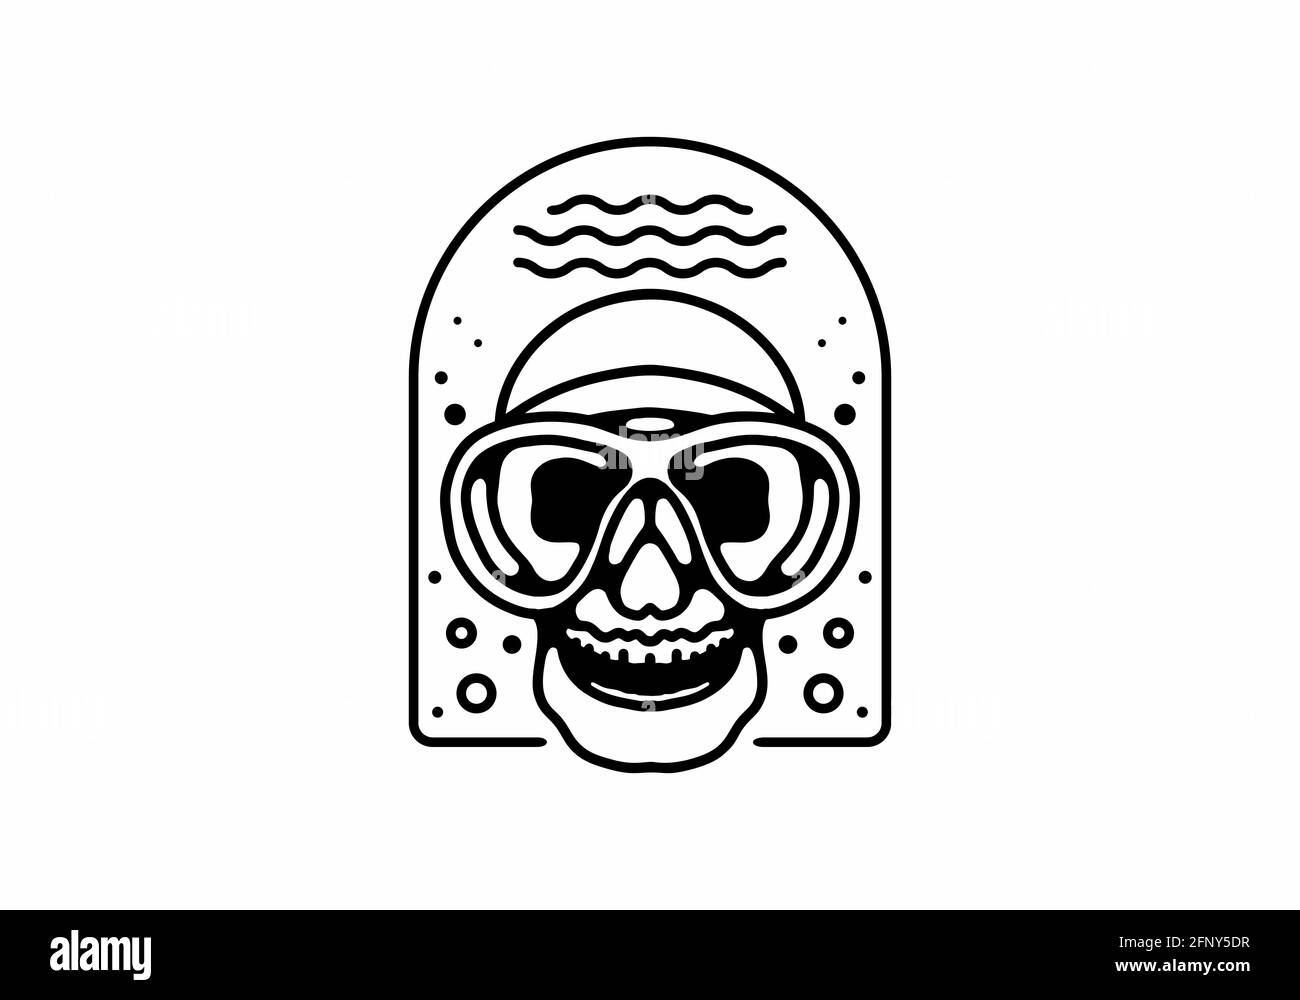 Black line art illustration of skull divers design Stock Vector